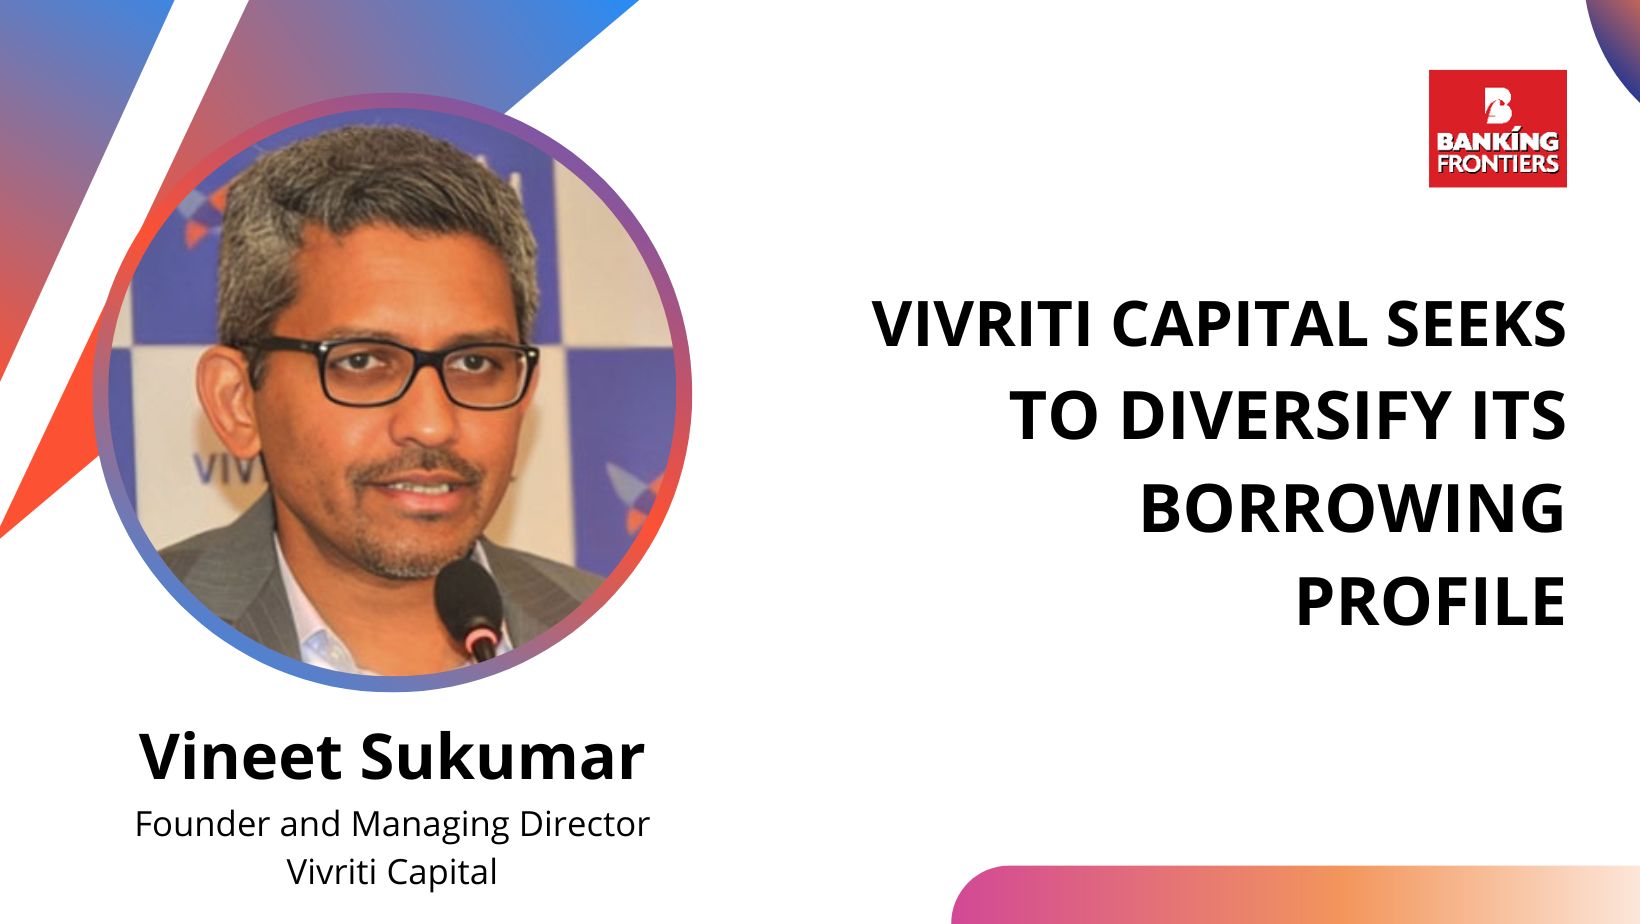 Vivriti Capital seeks to diversify its borrowing profile